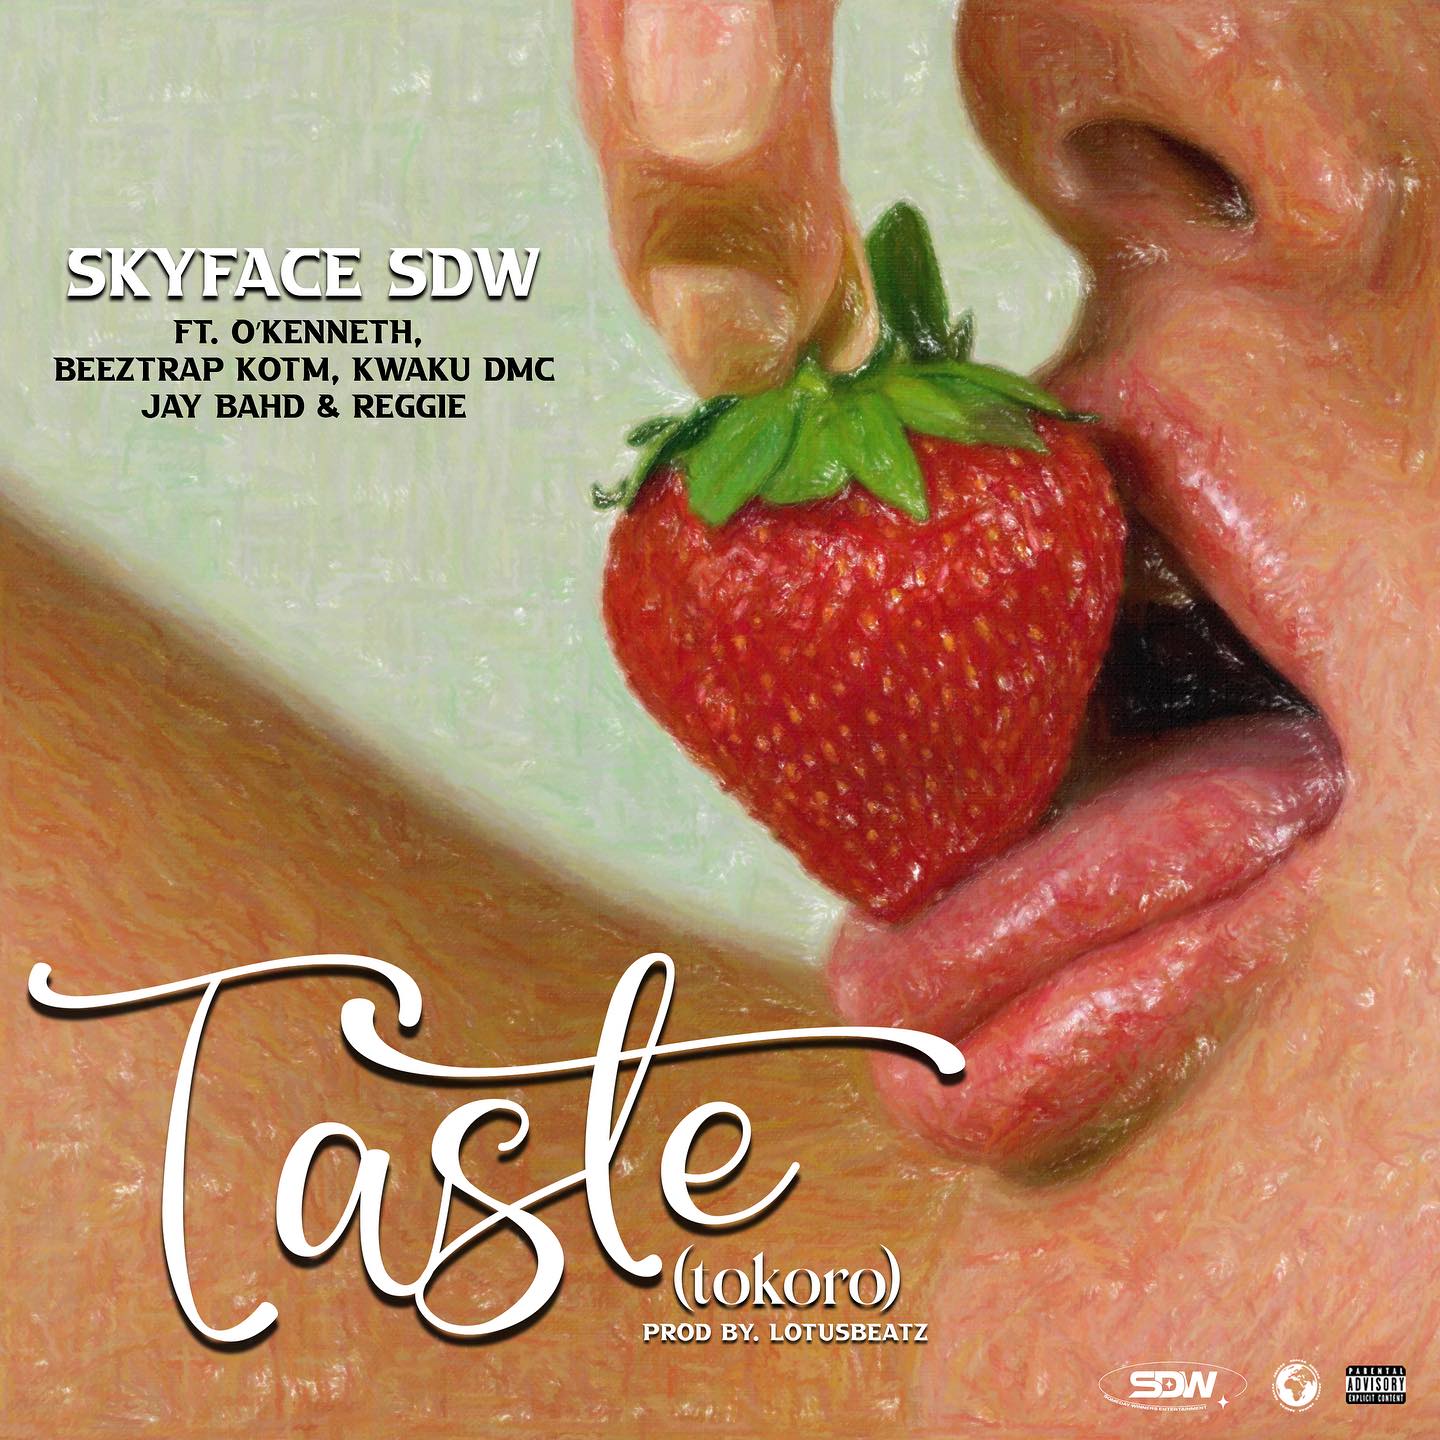 Skyface SDW – Taste (Tokoro) Ft. O’Kenneth, Beeztrap KOTM, Kwaku DMC, Jay Bahd & Reggie